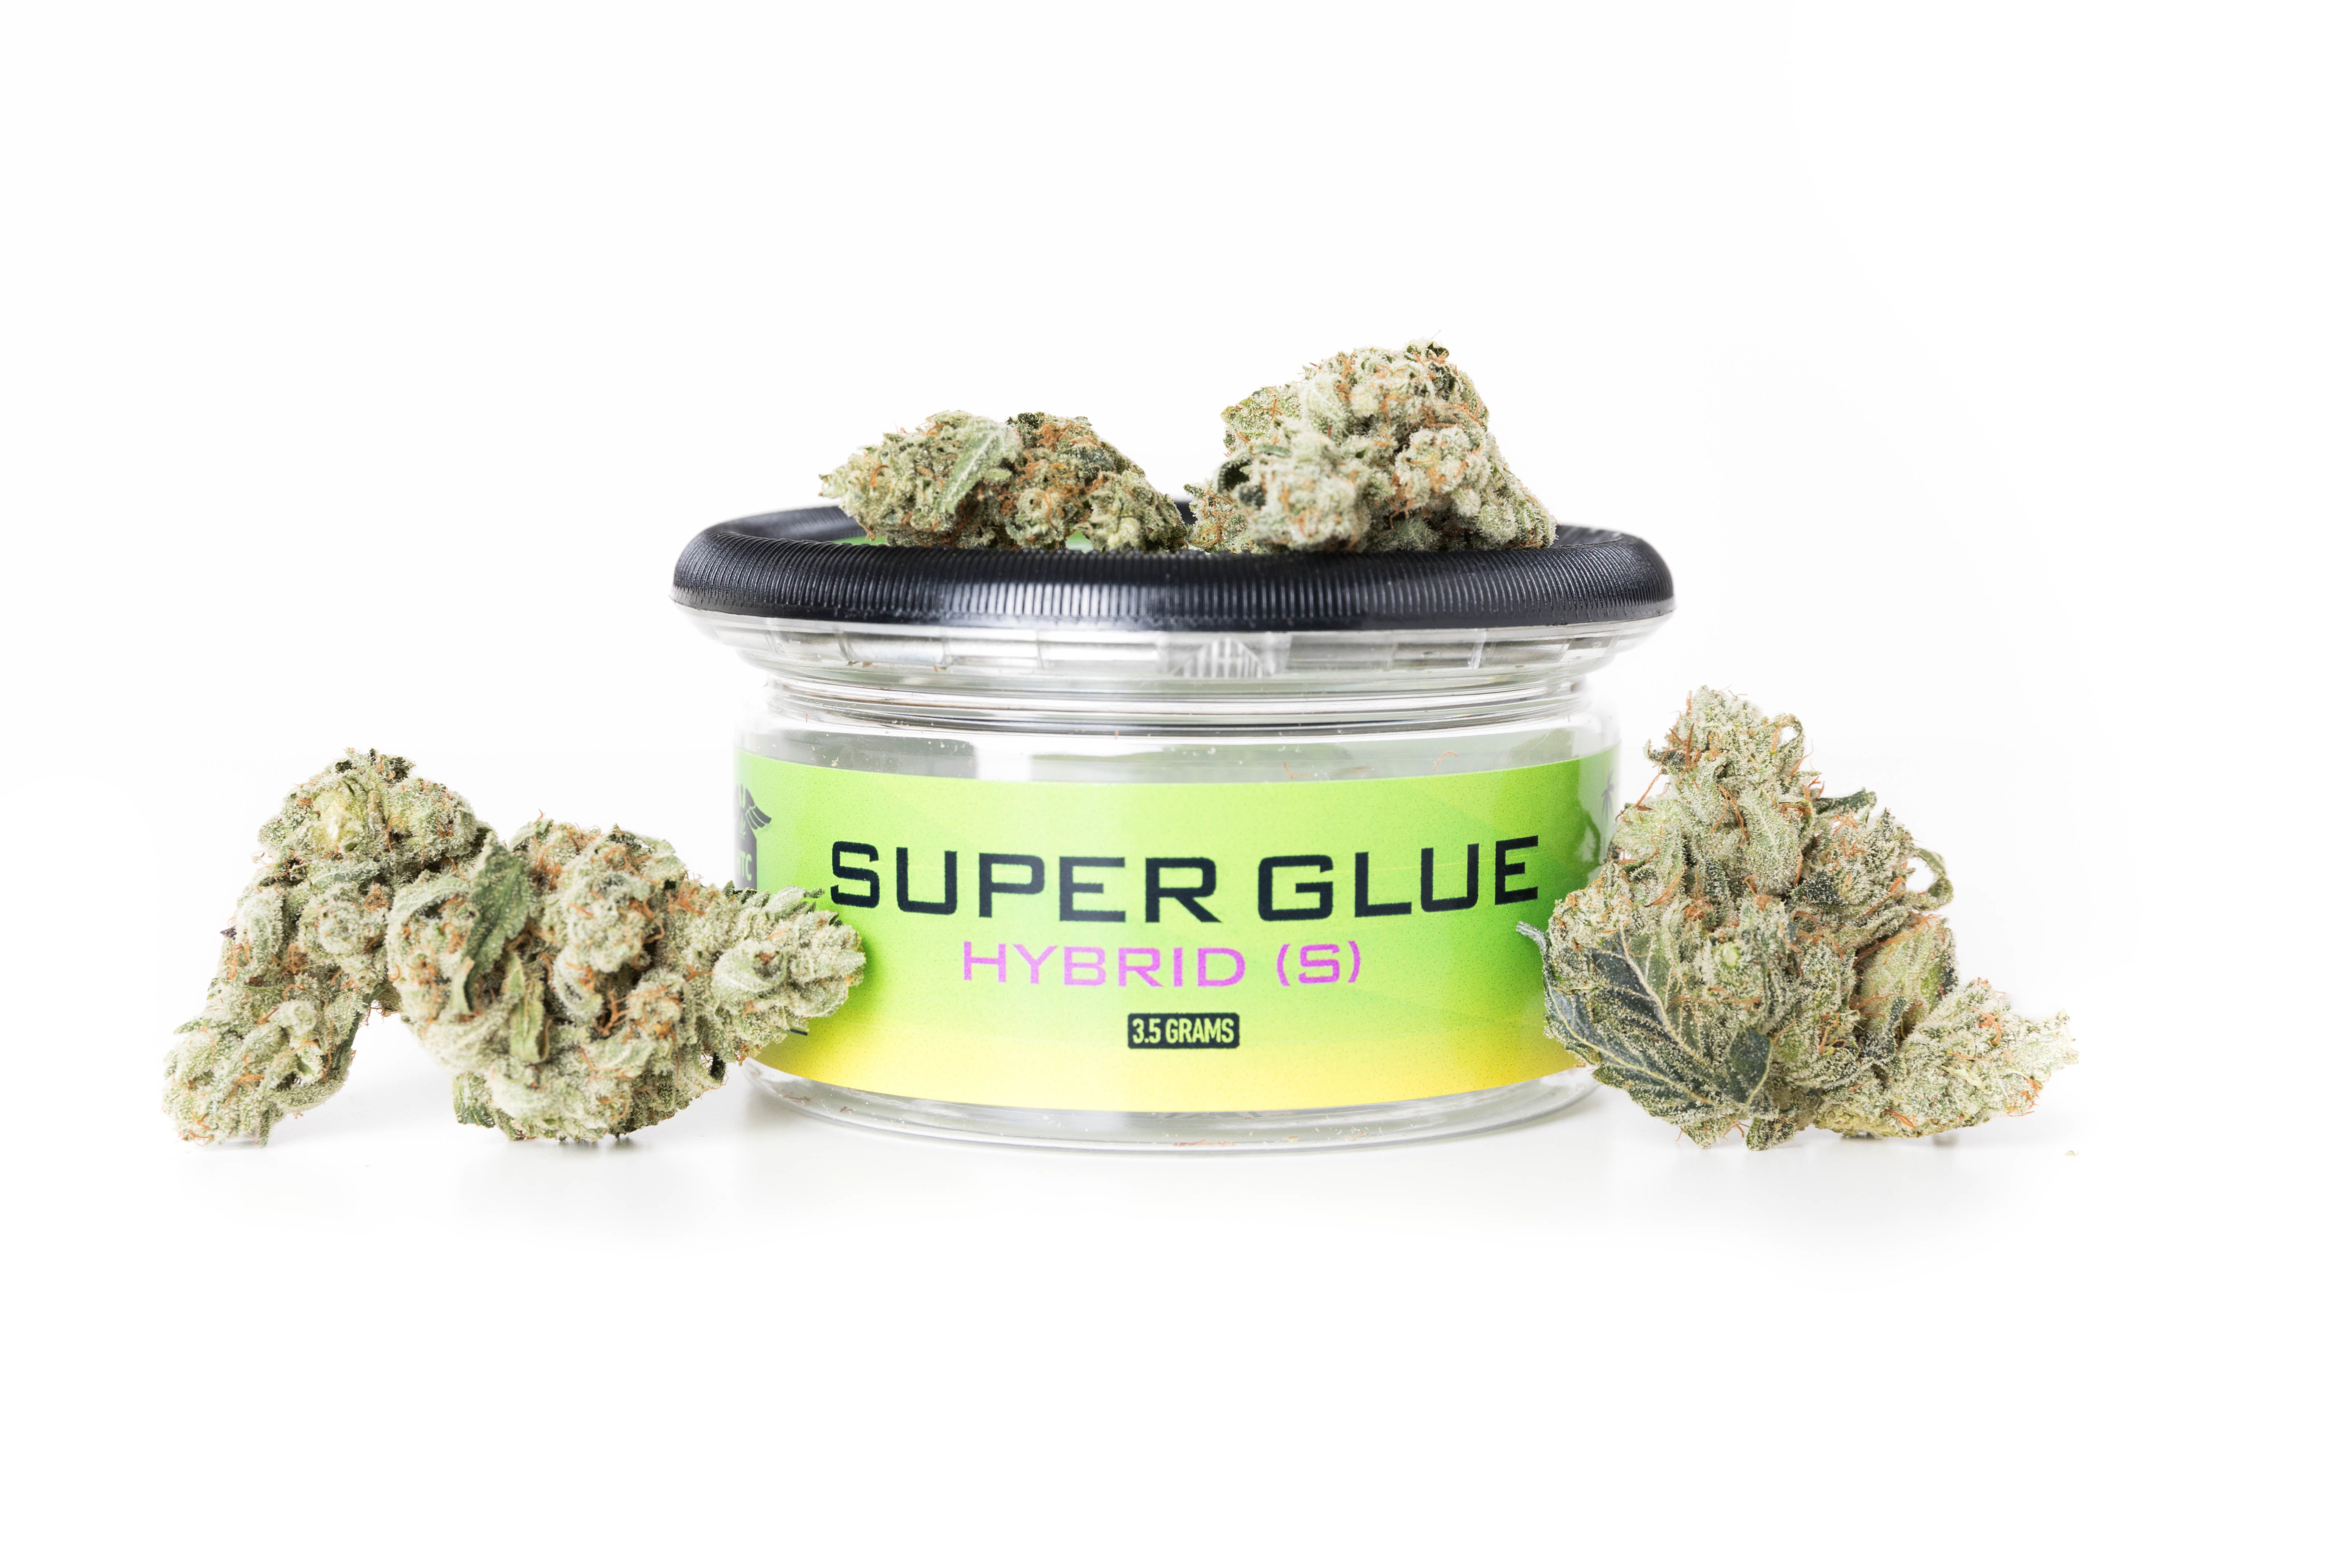 marijuana-dispensaries-820-south-main-st-los-angeles-super-glue-high-tolerance